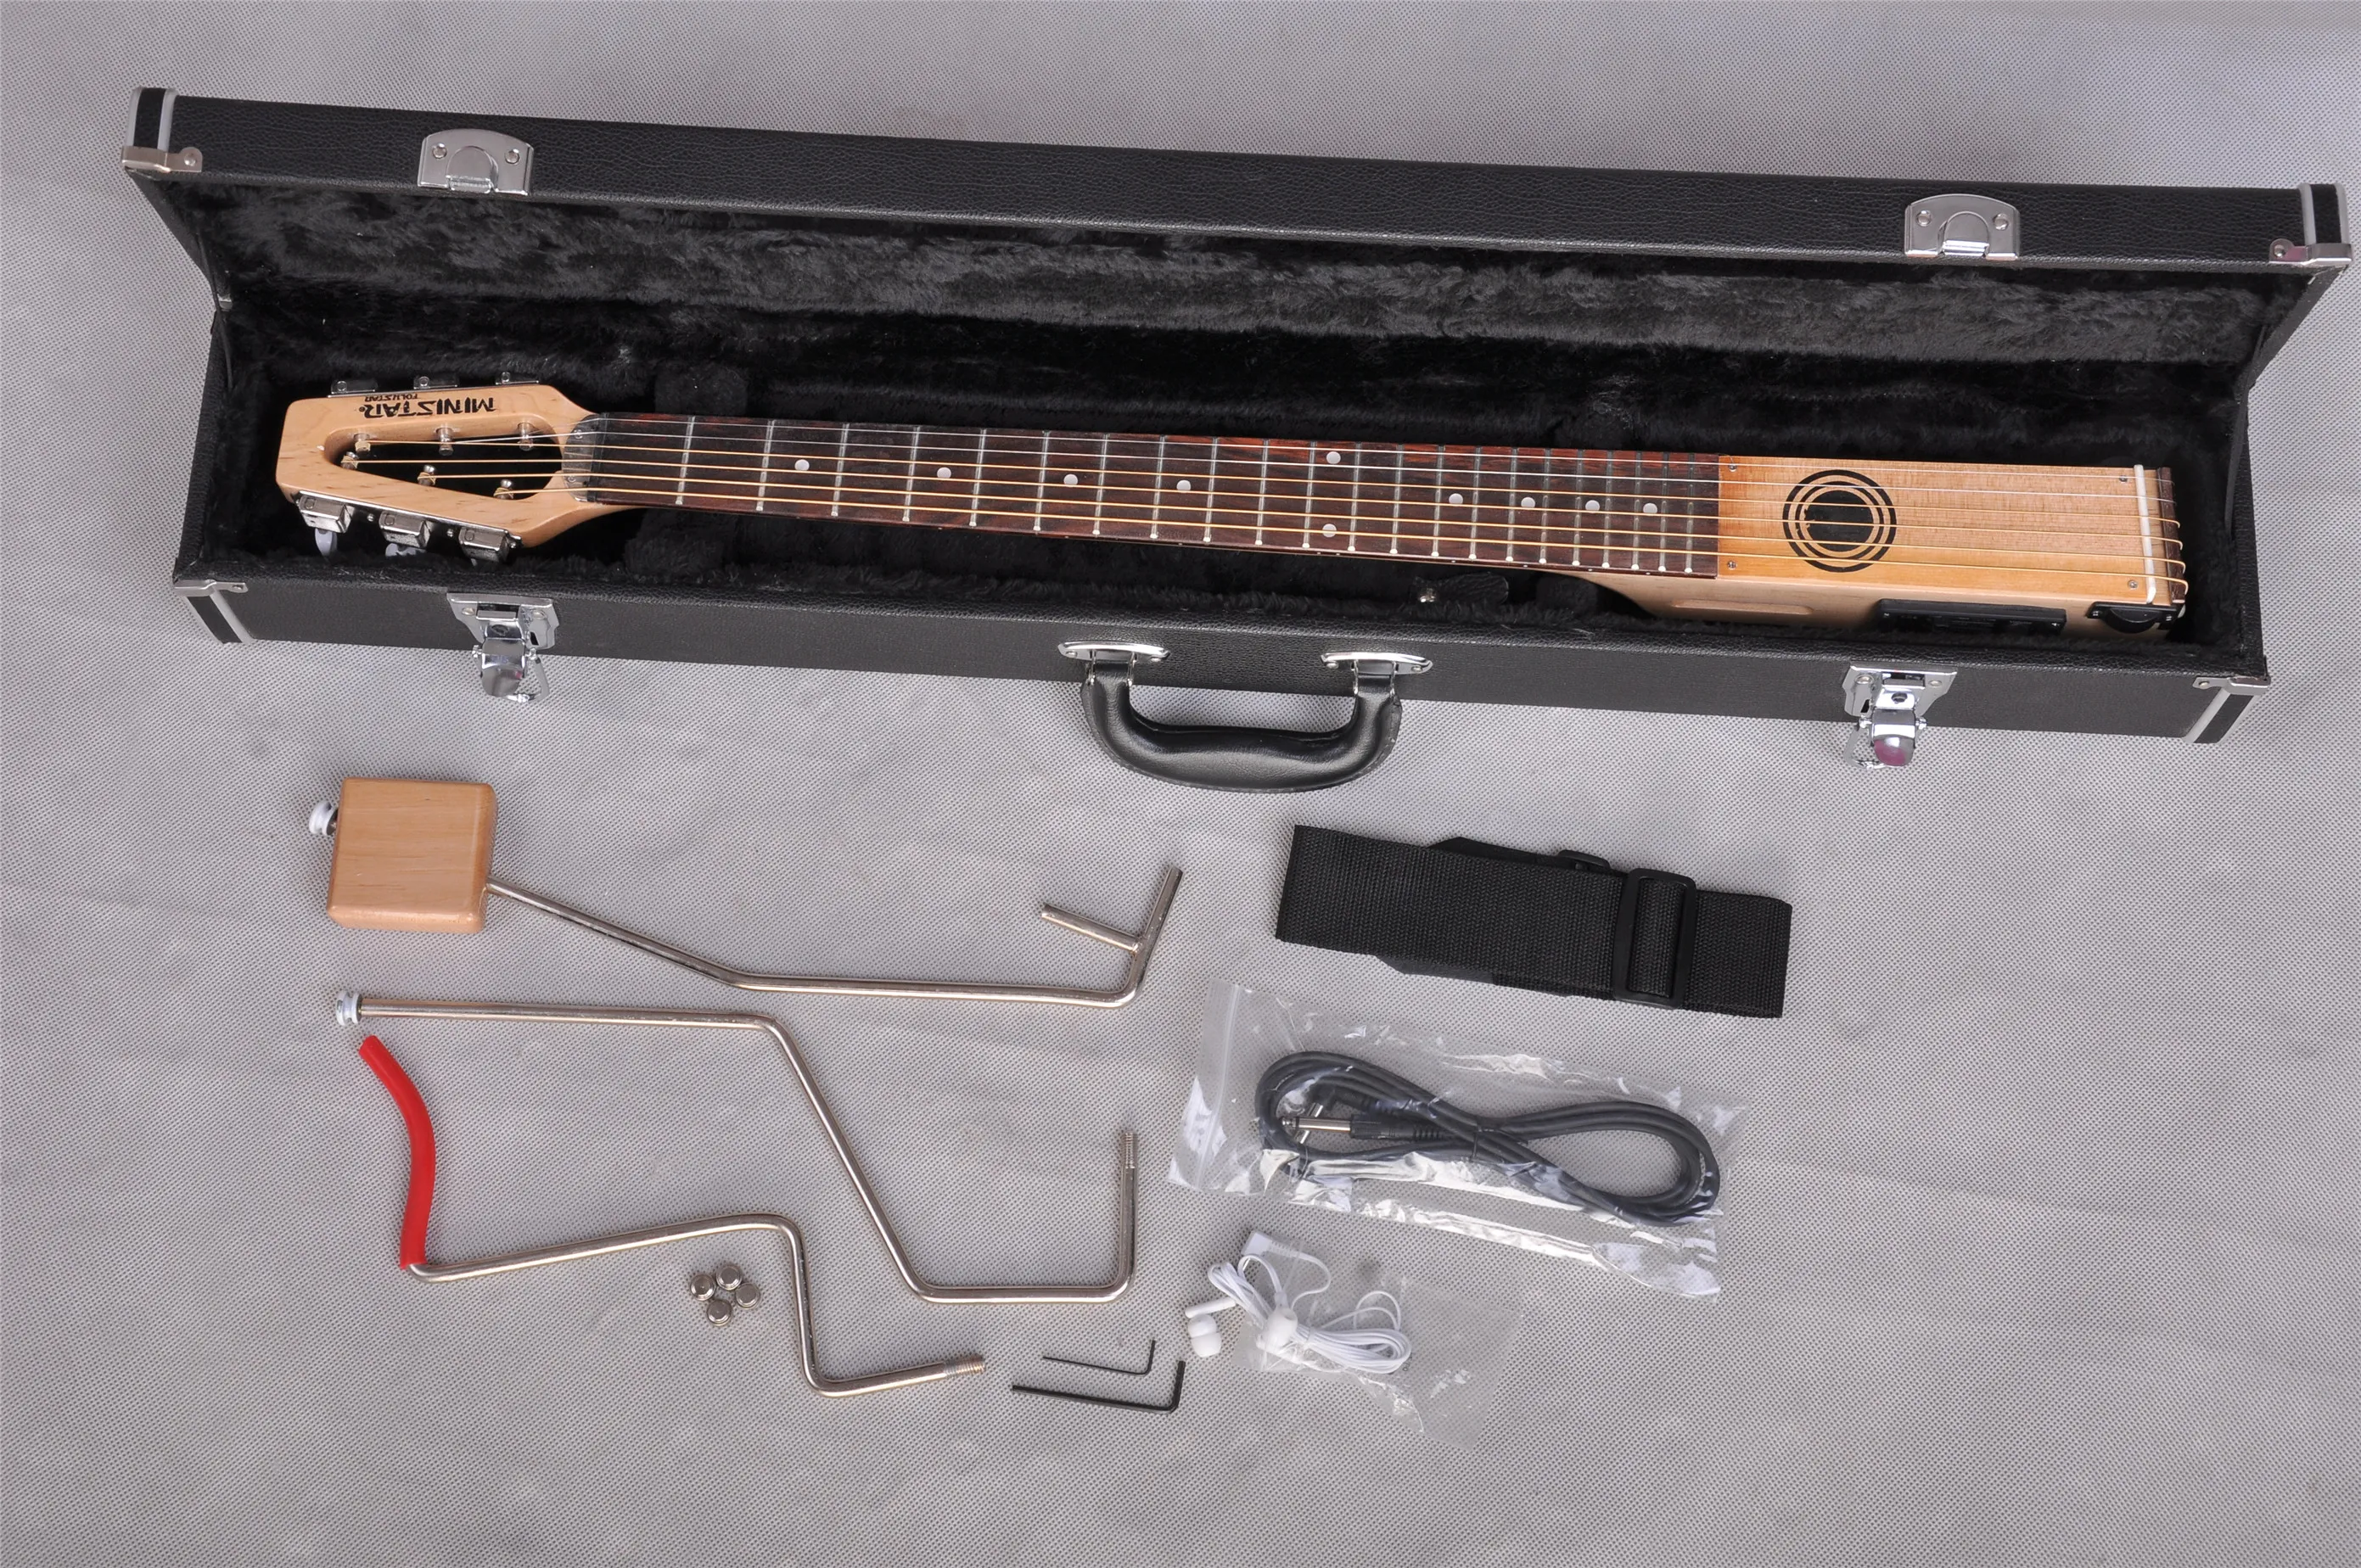 Op voorraad Mini star Folkstar reis elektrische gitaar met draagtas Mini Portable Silent GuitarWhole8494688